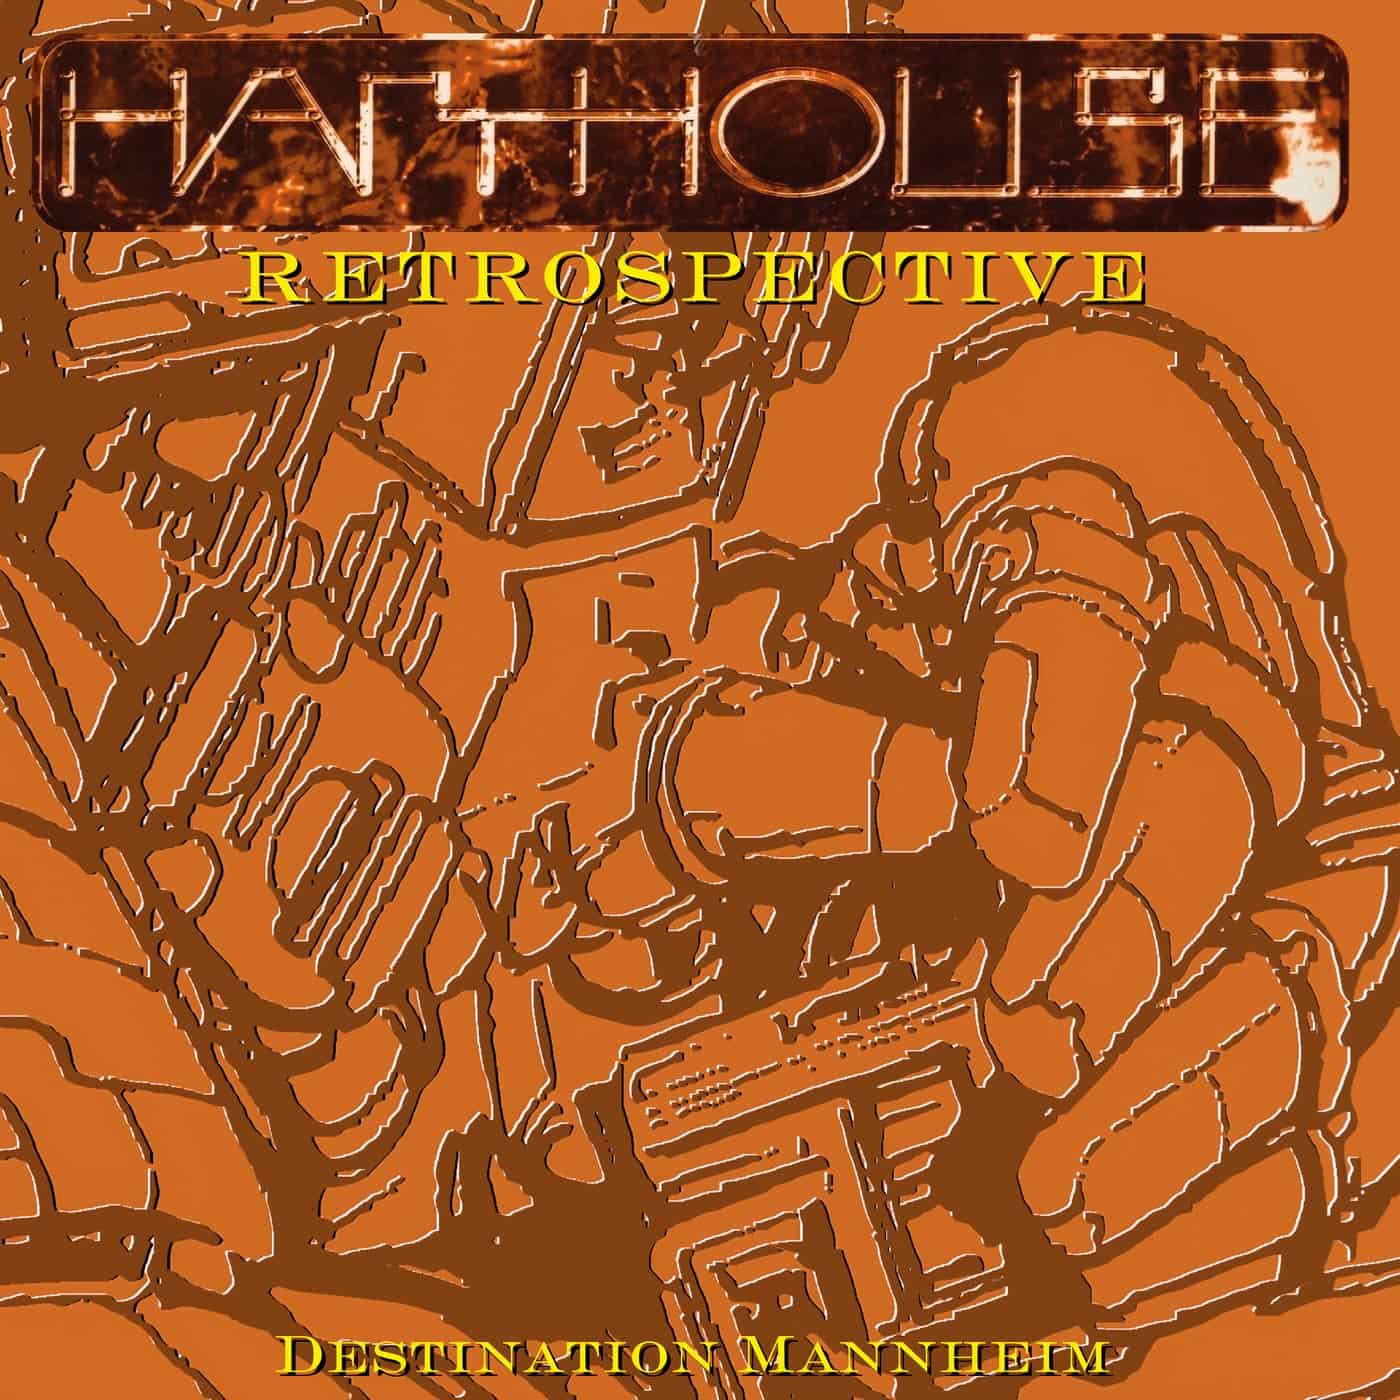 Download VA - Harthouse Retrospective (Destination Mannheim) on Electrobuzz